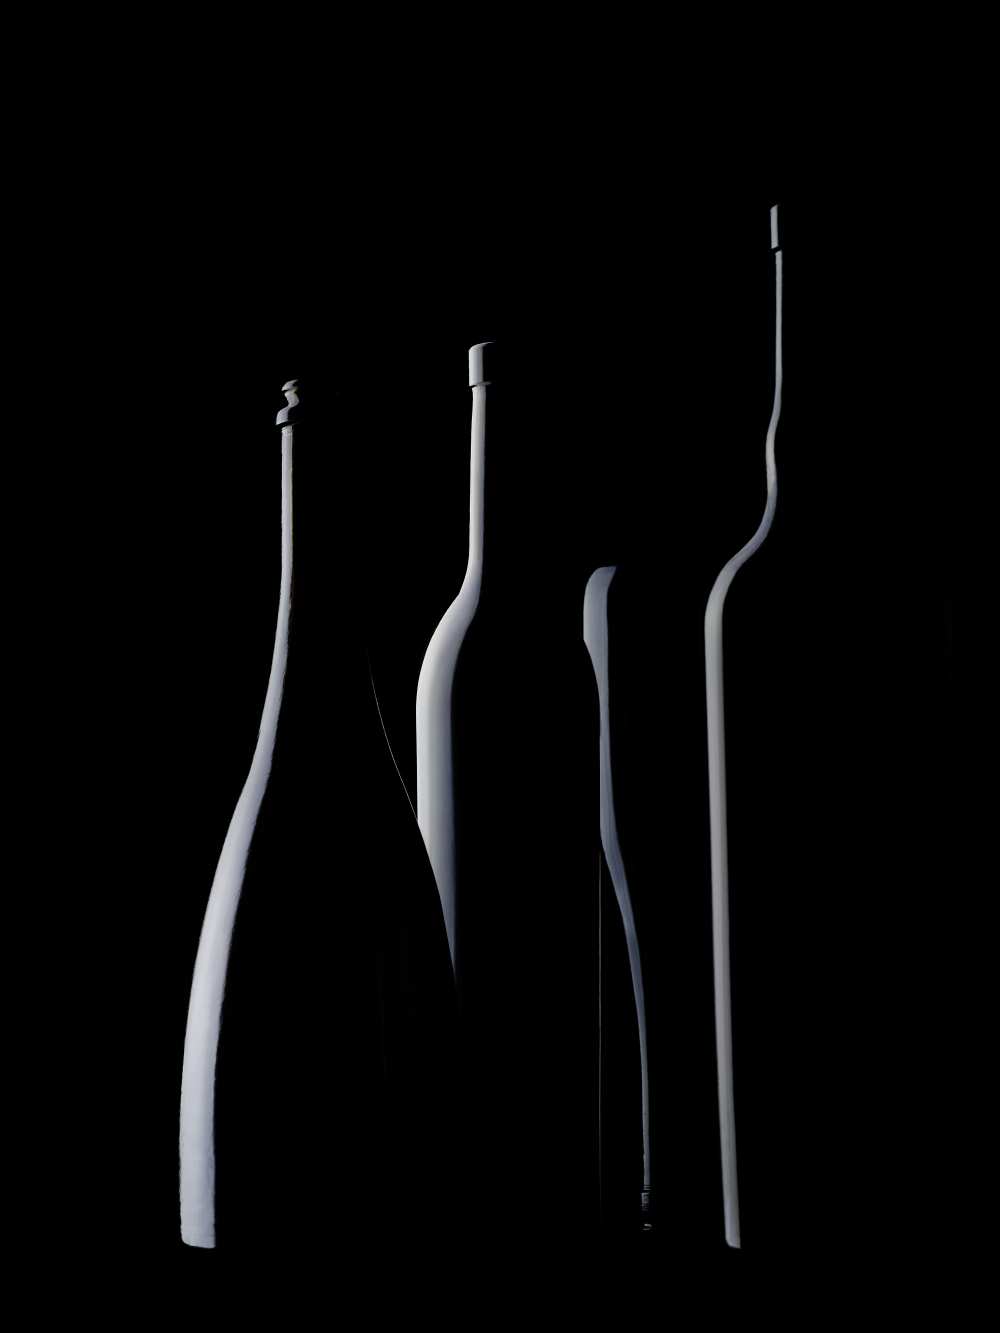 Bottles Waiting od Jorge Pena